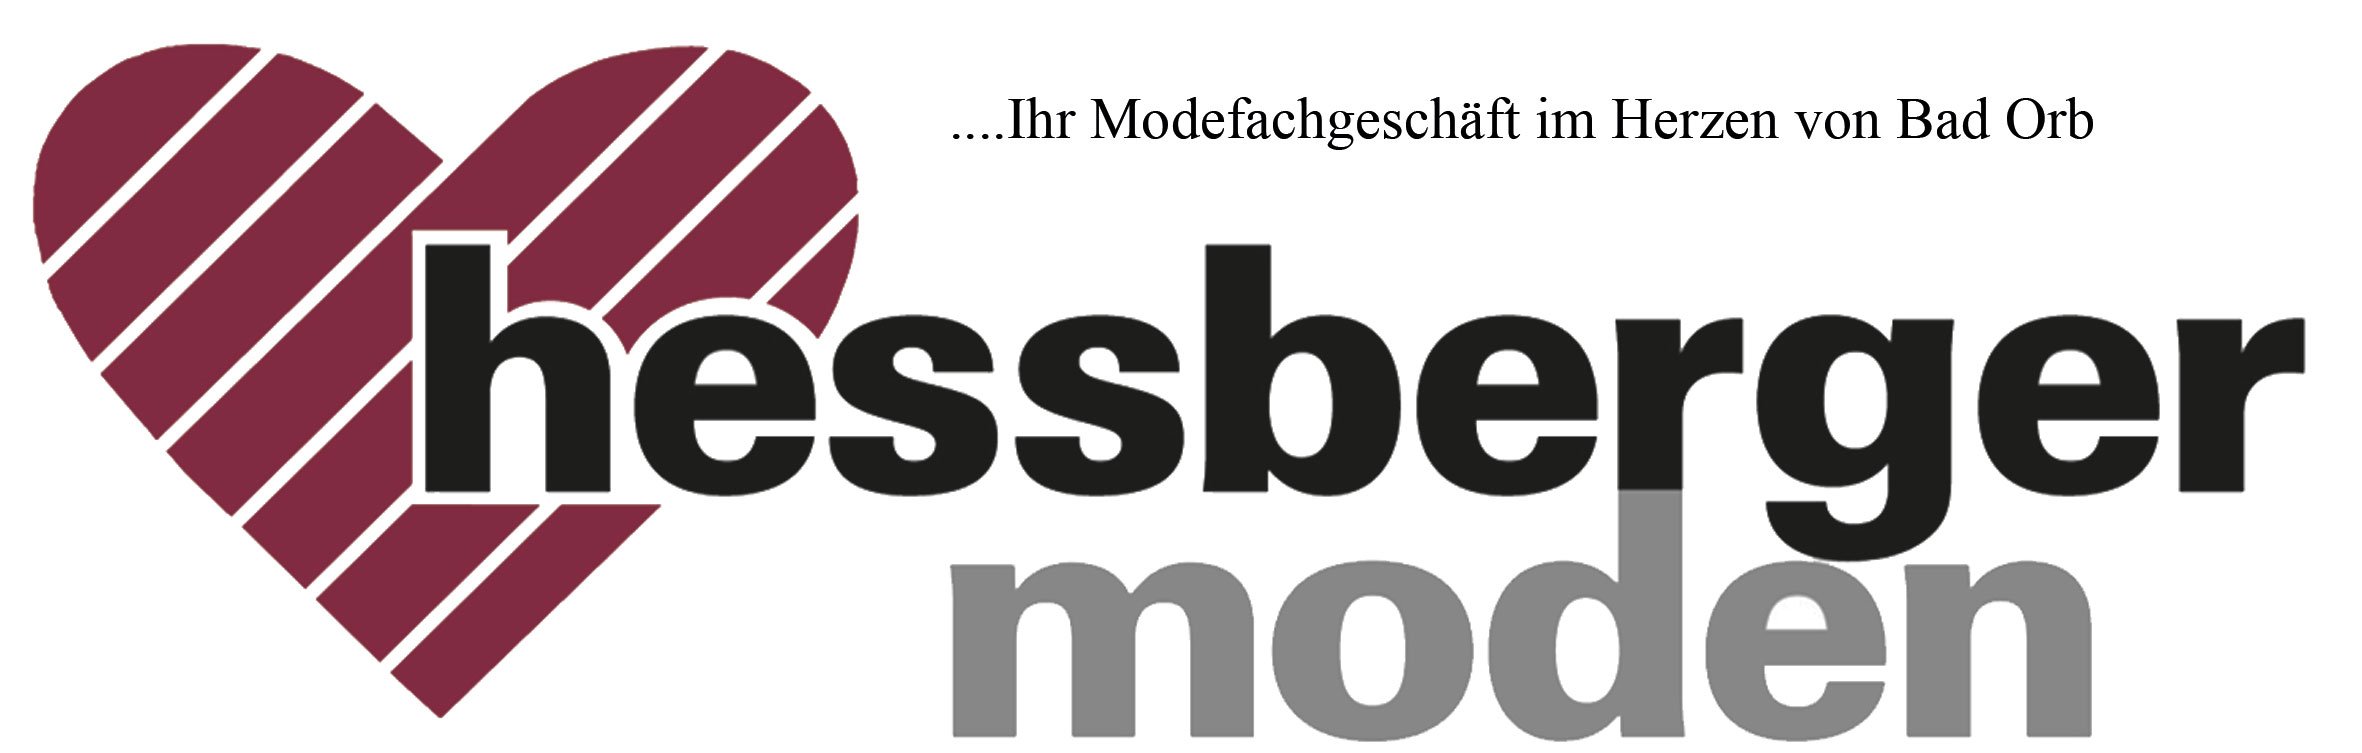 Hessberger Moden 24/7